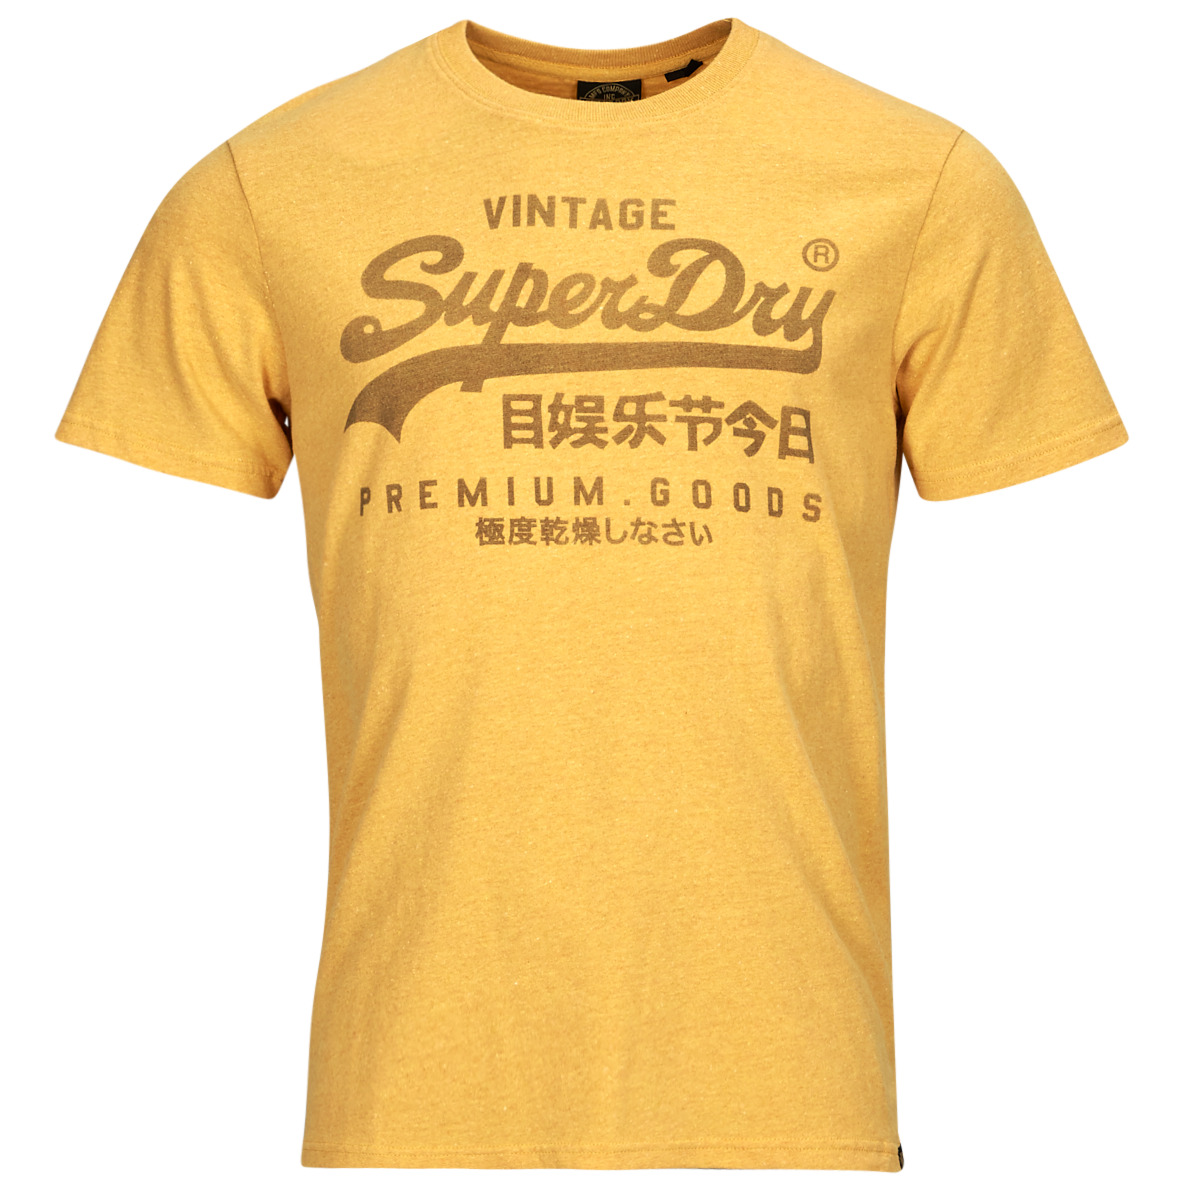 textil Hombre Camisetas manga corta Superdry CLASSIC VL HERITAGE T SHIRT Naranja